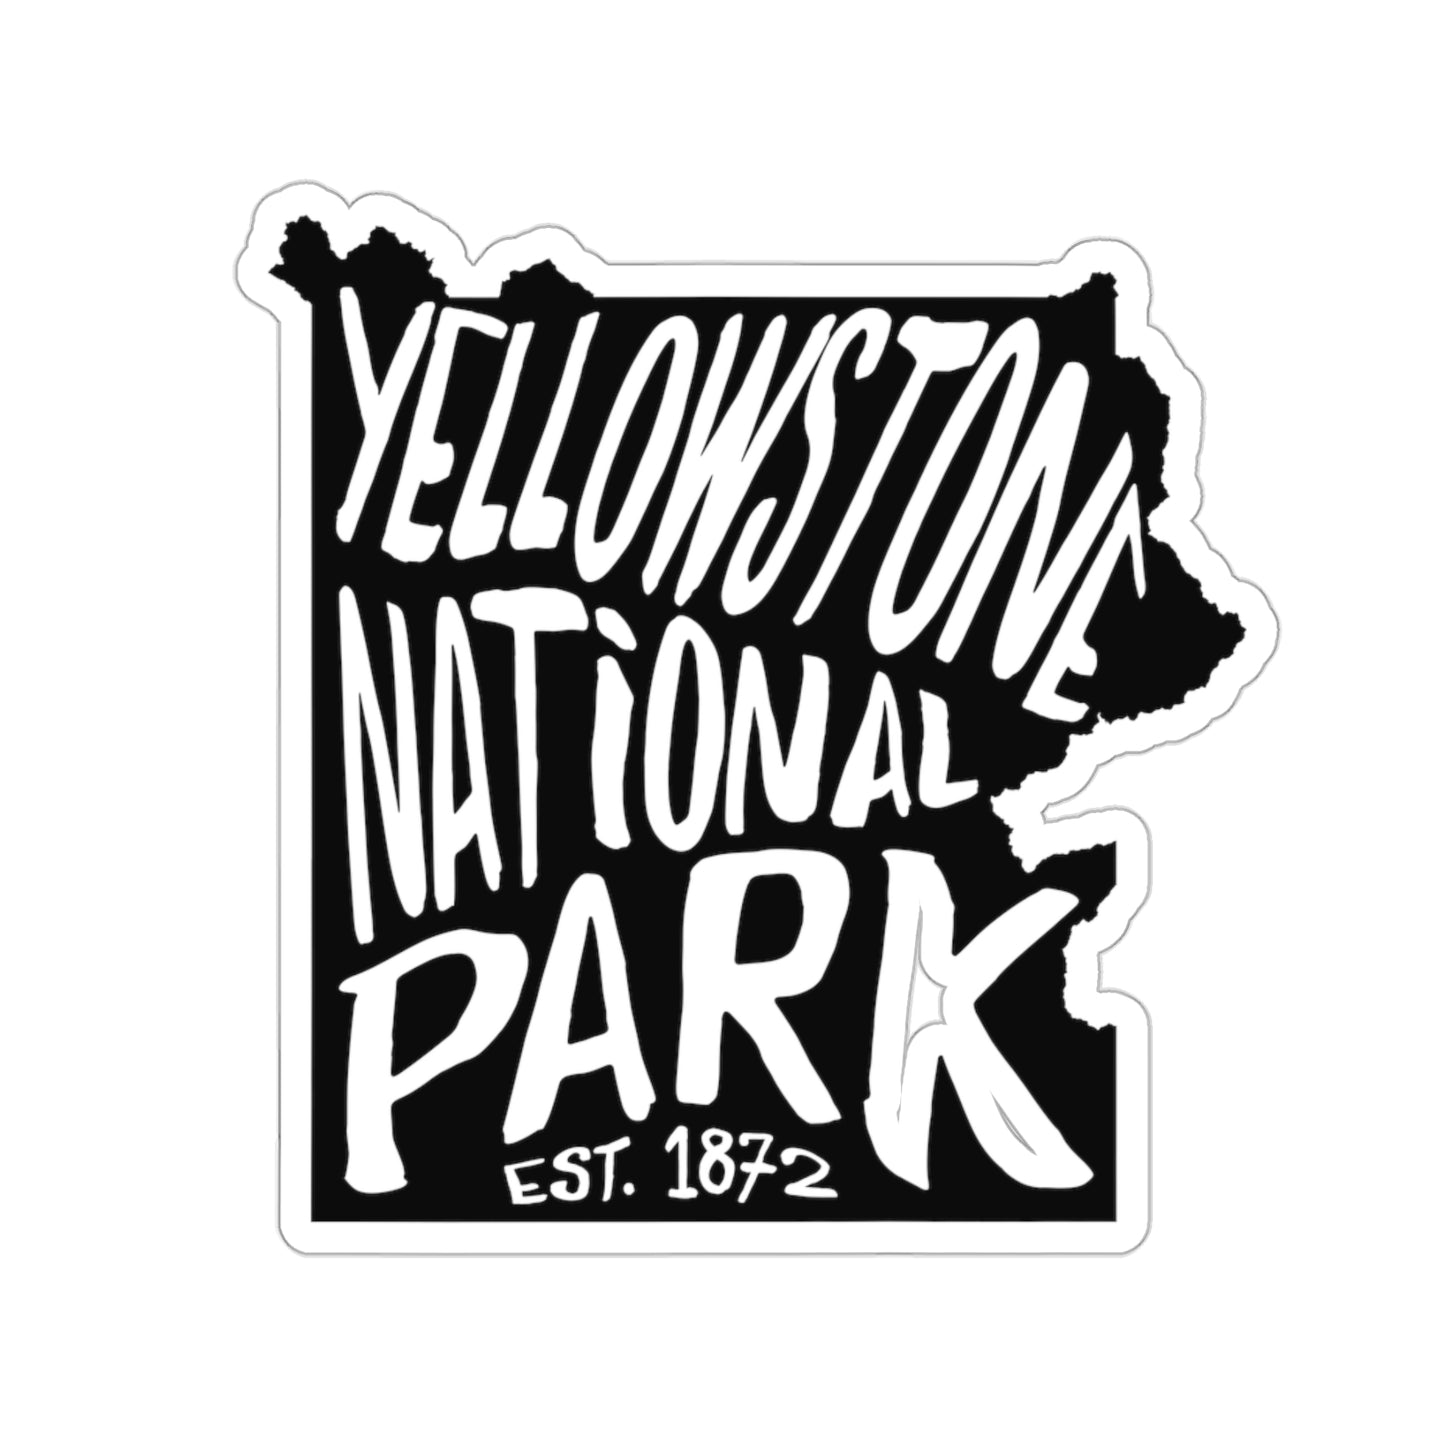 Yellowstone National Park Sticker - Map